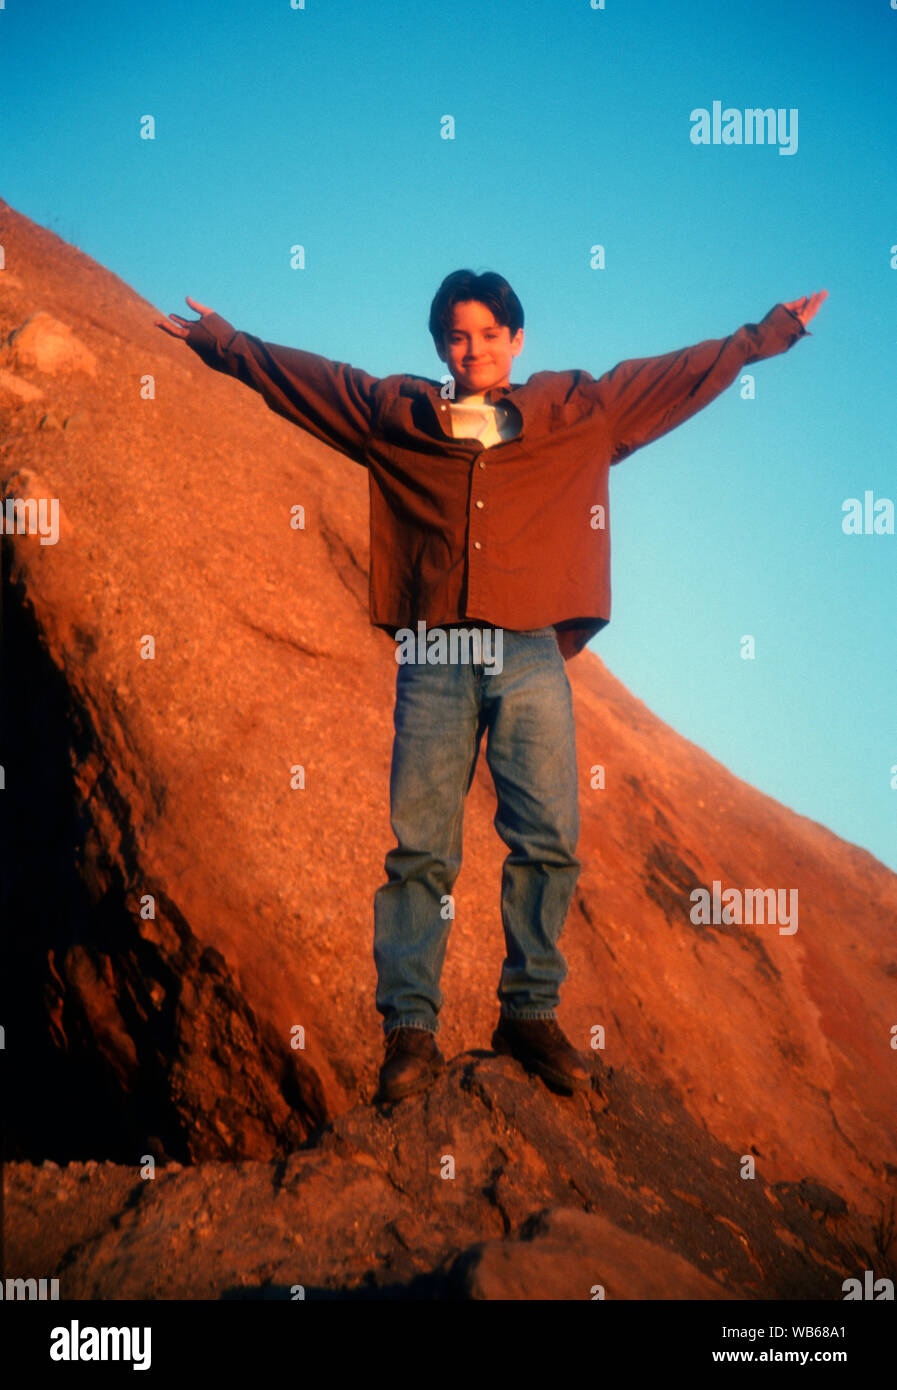 Los Angeles, California, USA 9th November 1994 (Exclusive) Actor Elijah Wood poses at a photo shoot on November 9, 1994 in Los Angeles, California, USA. Photo by Barry King/Alamy Stock Photo Stock Photo